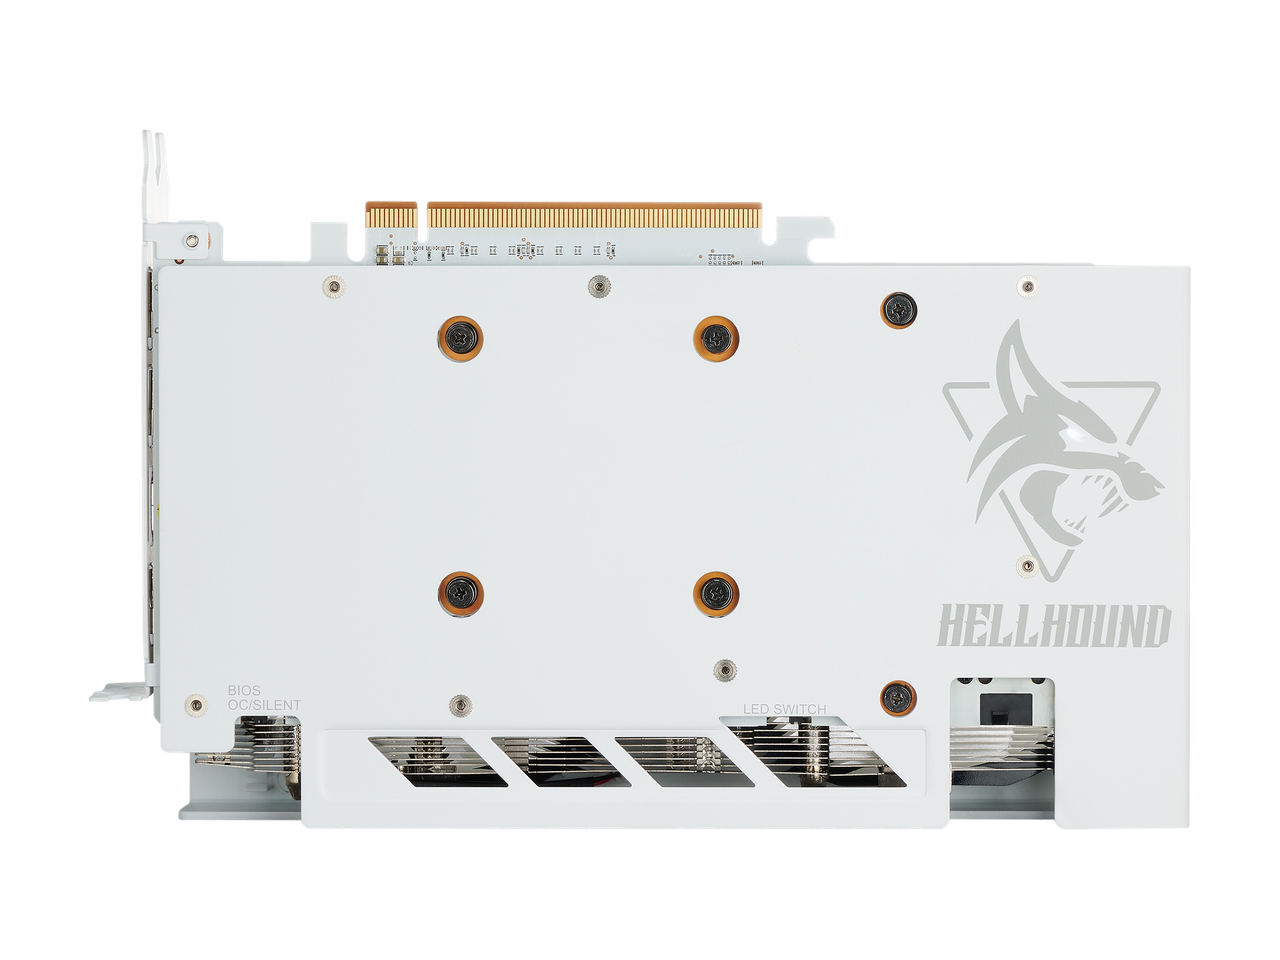 PowerColor Hellhound Spectral White Radeon RX 6650 XT 8GB GDDR6 PCI Express 4.0 ATX Video Card AXRX 6650XT 8GBD6-3DHLV2/OC